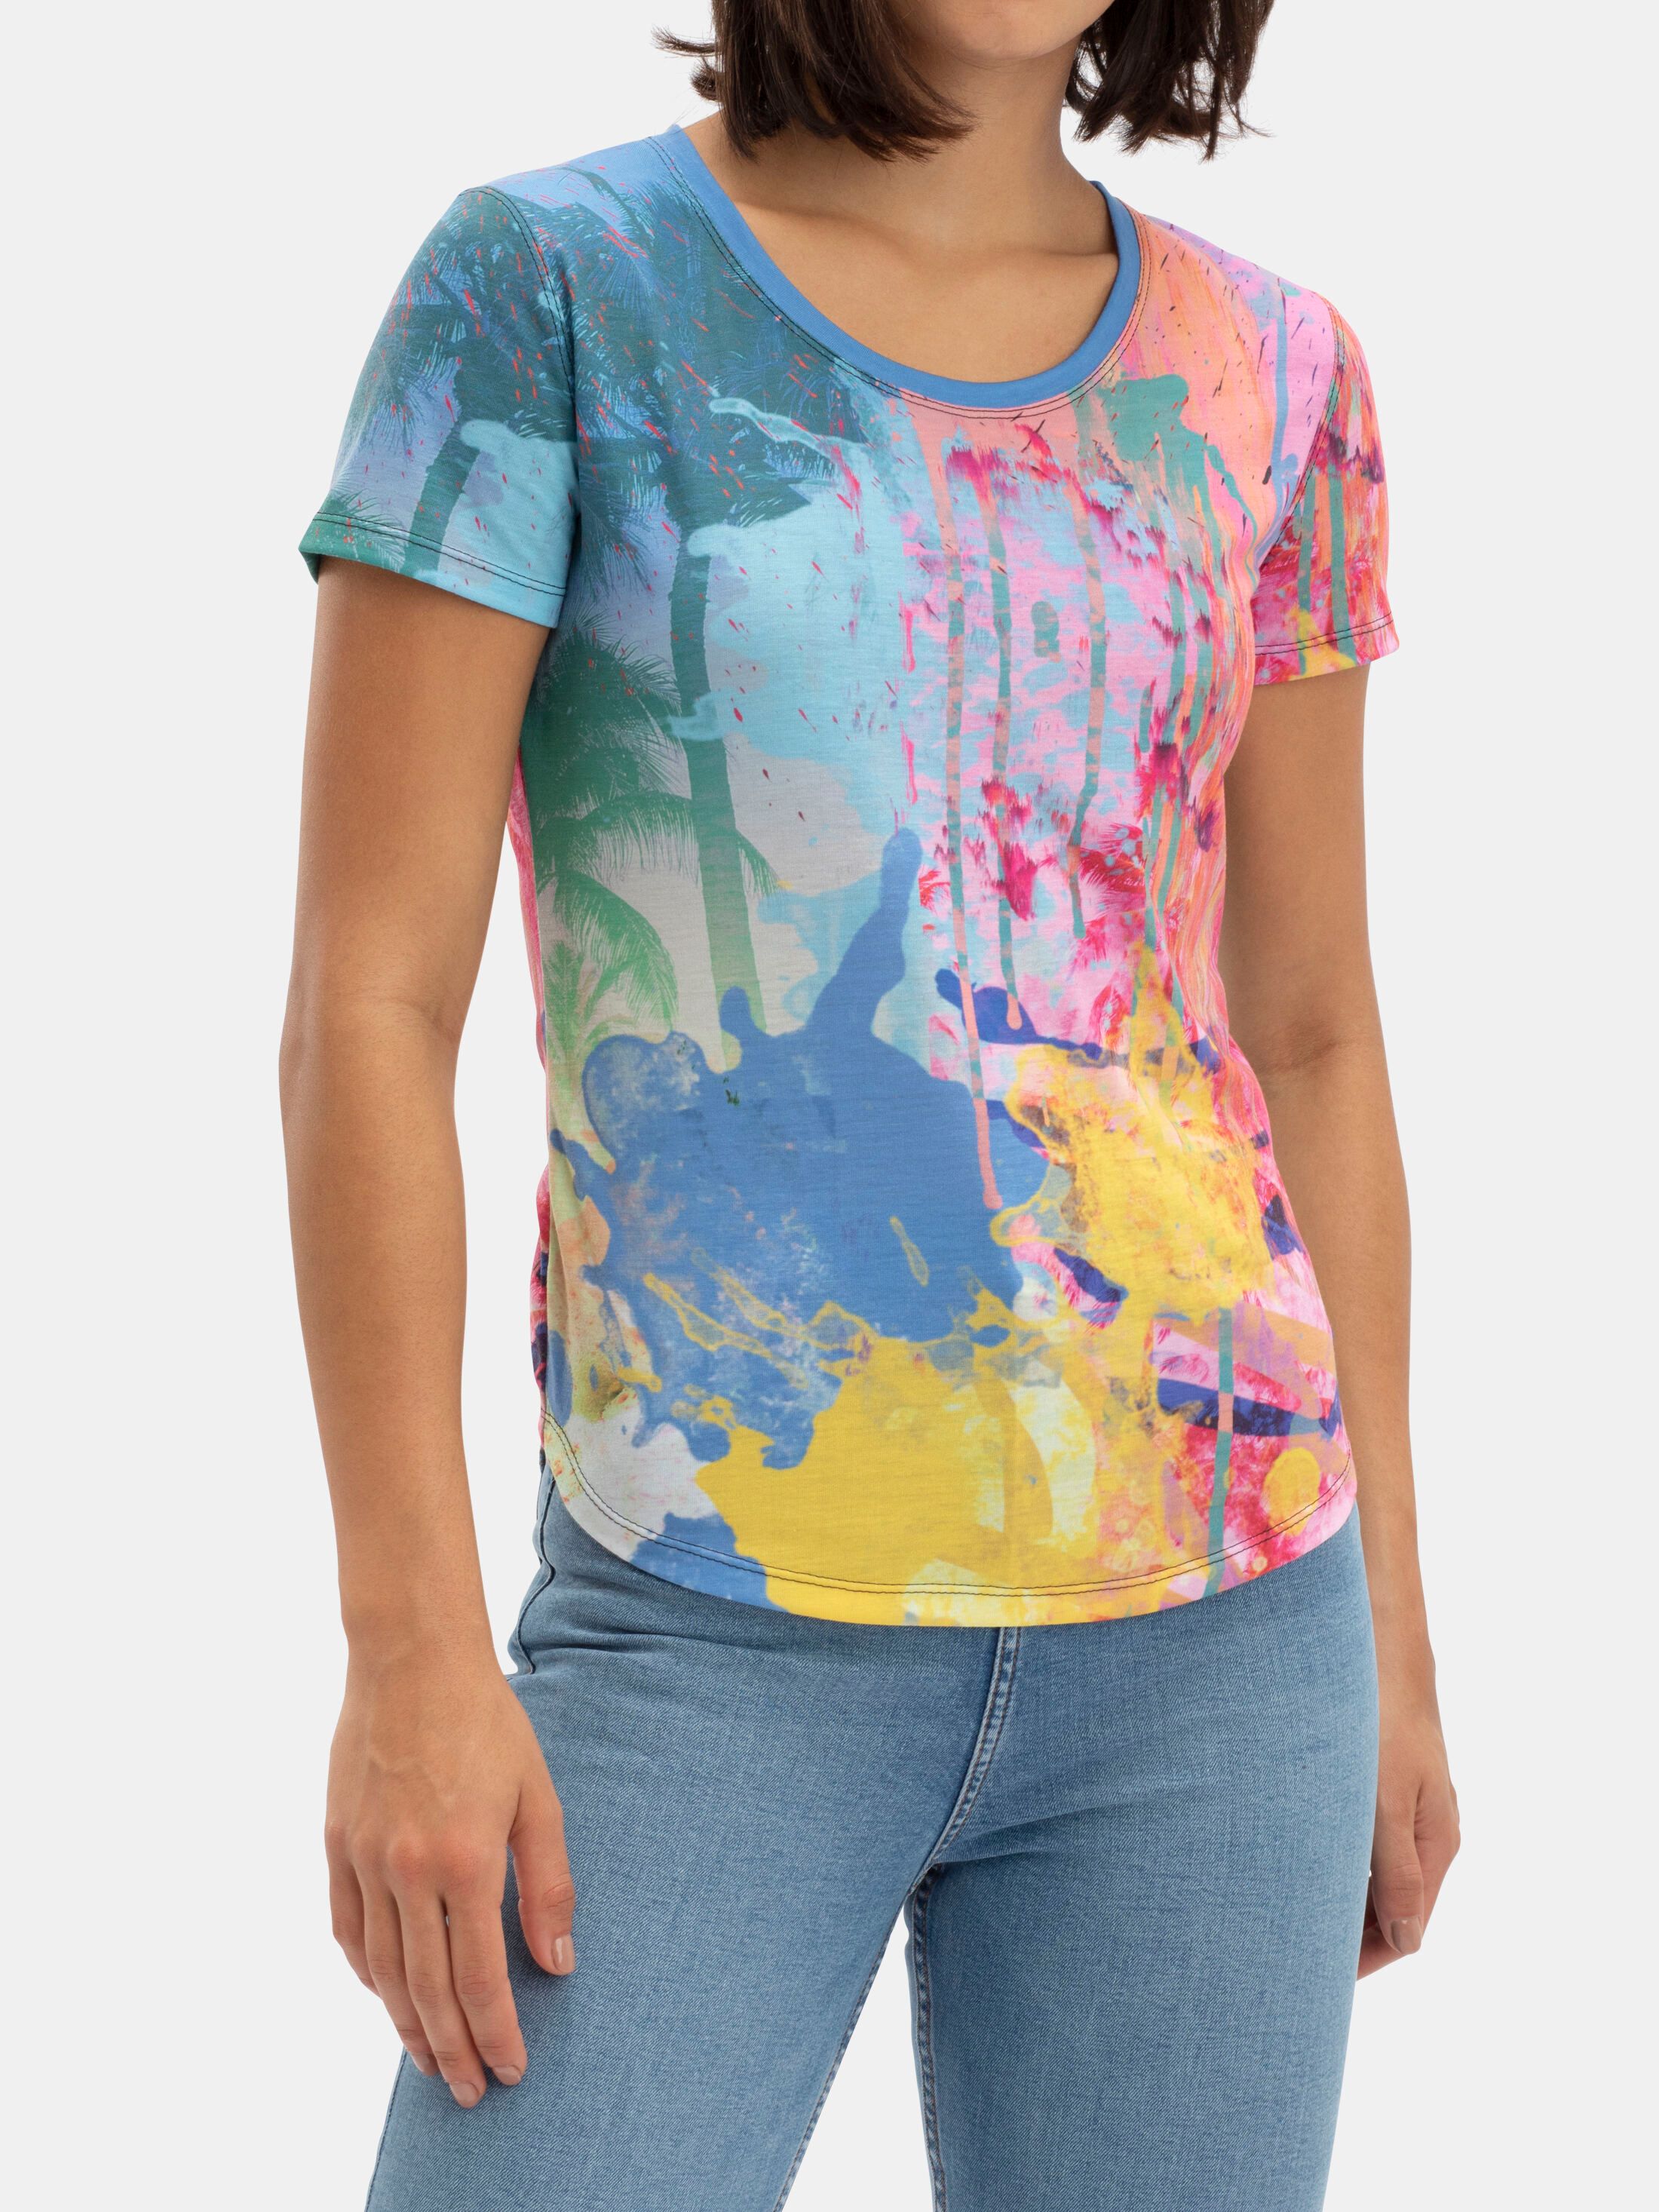 Mujer | Diseñar Camisetas Online